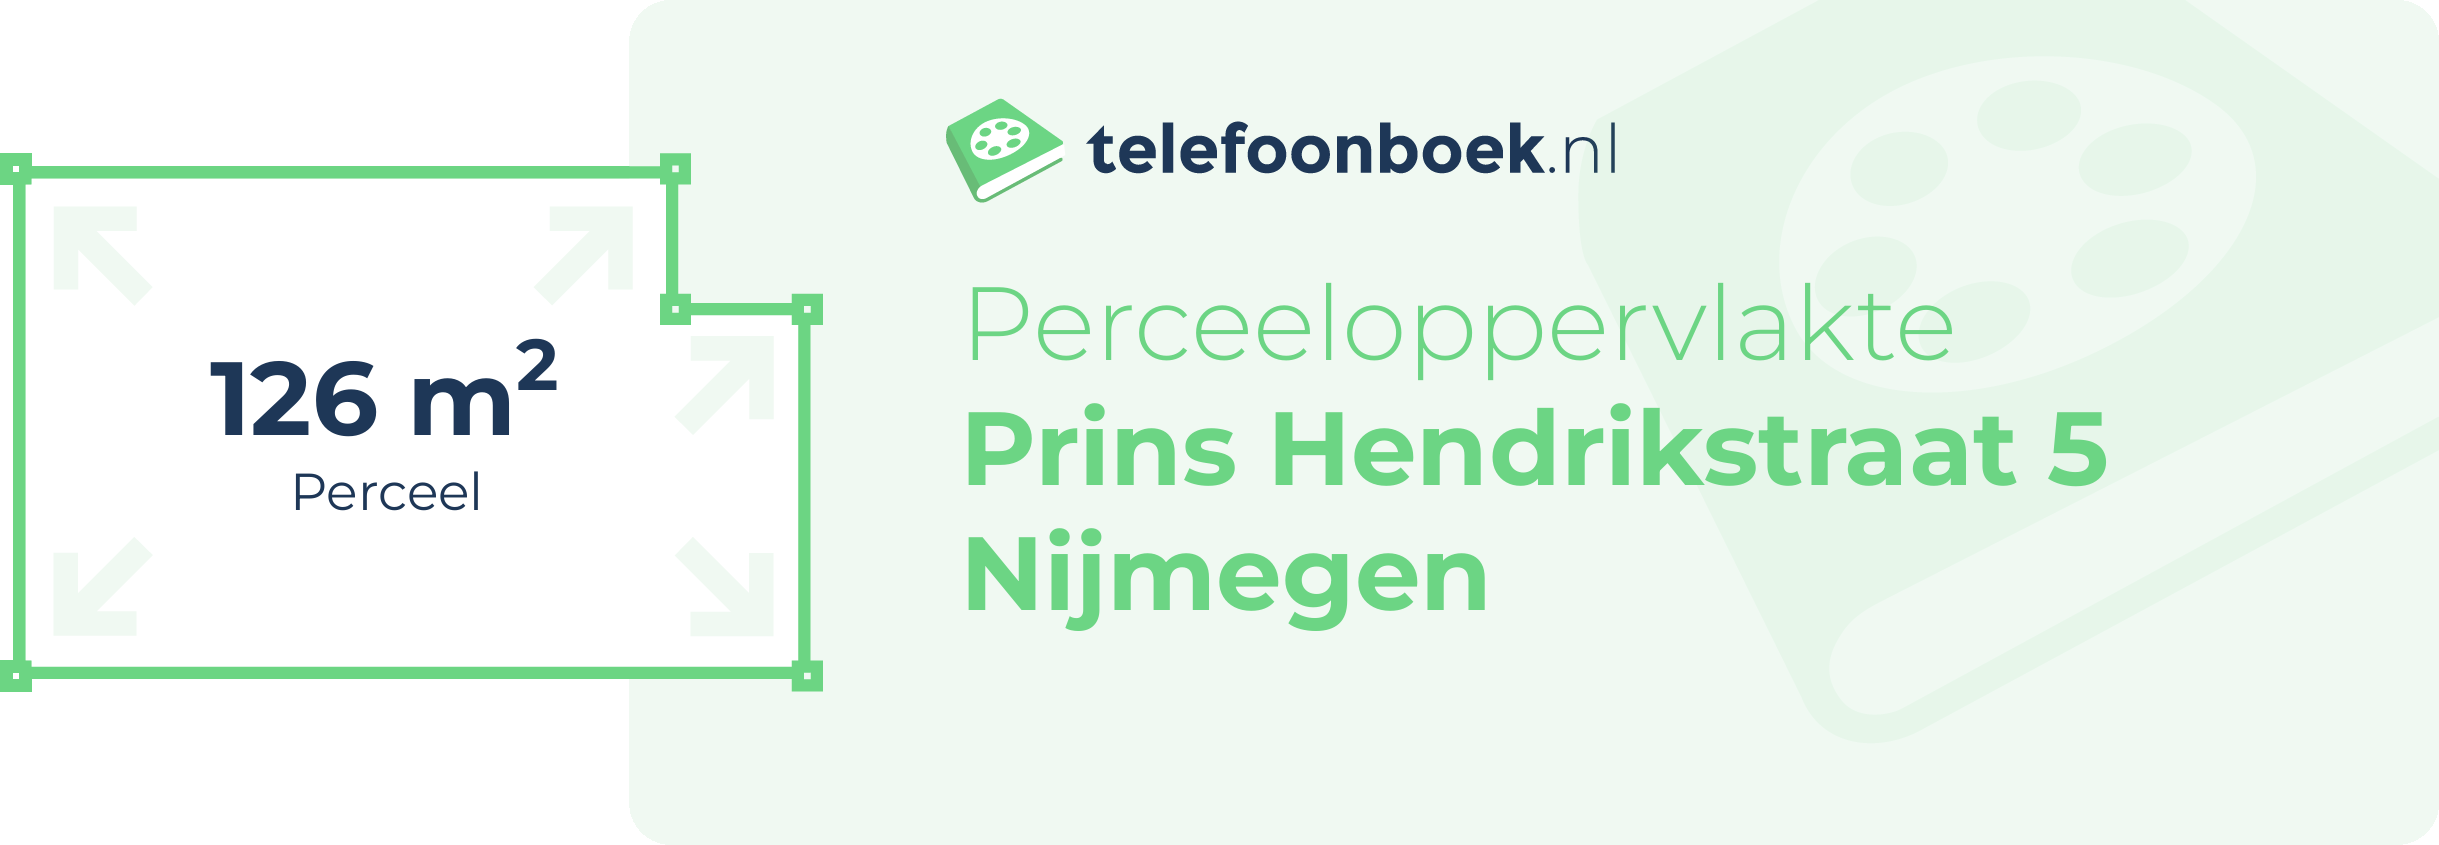 Perceeloppervlakte Prins Hendrikstraat 5 Nijmegen